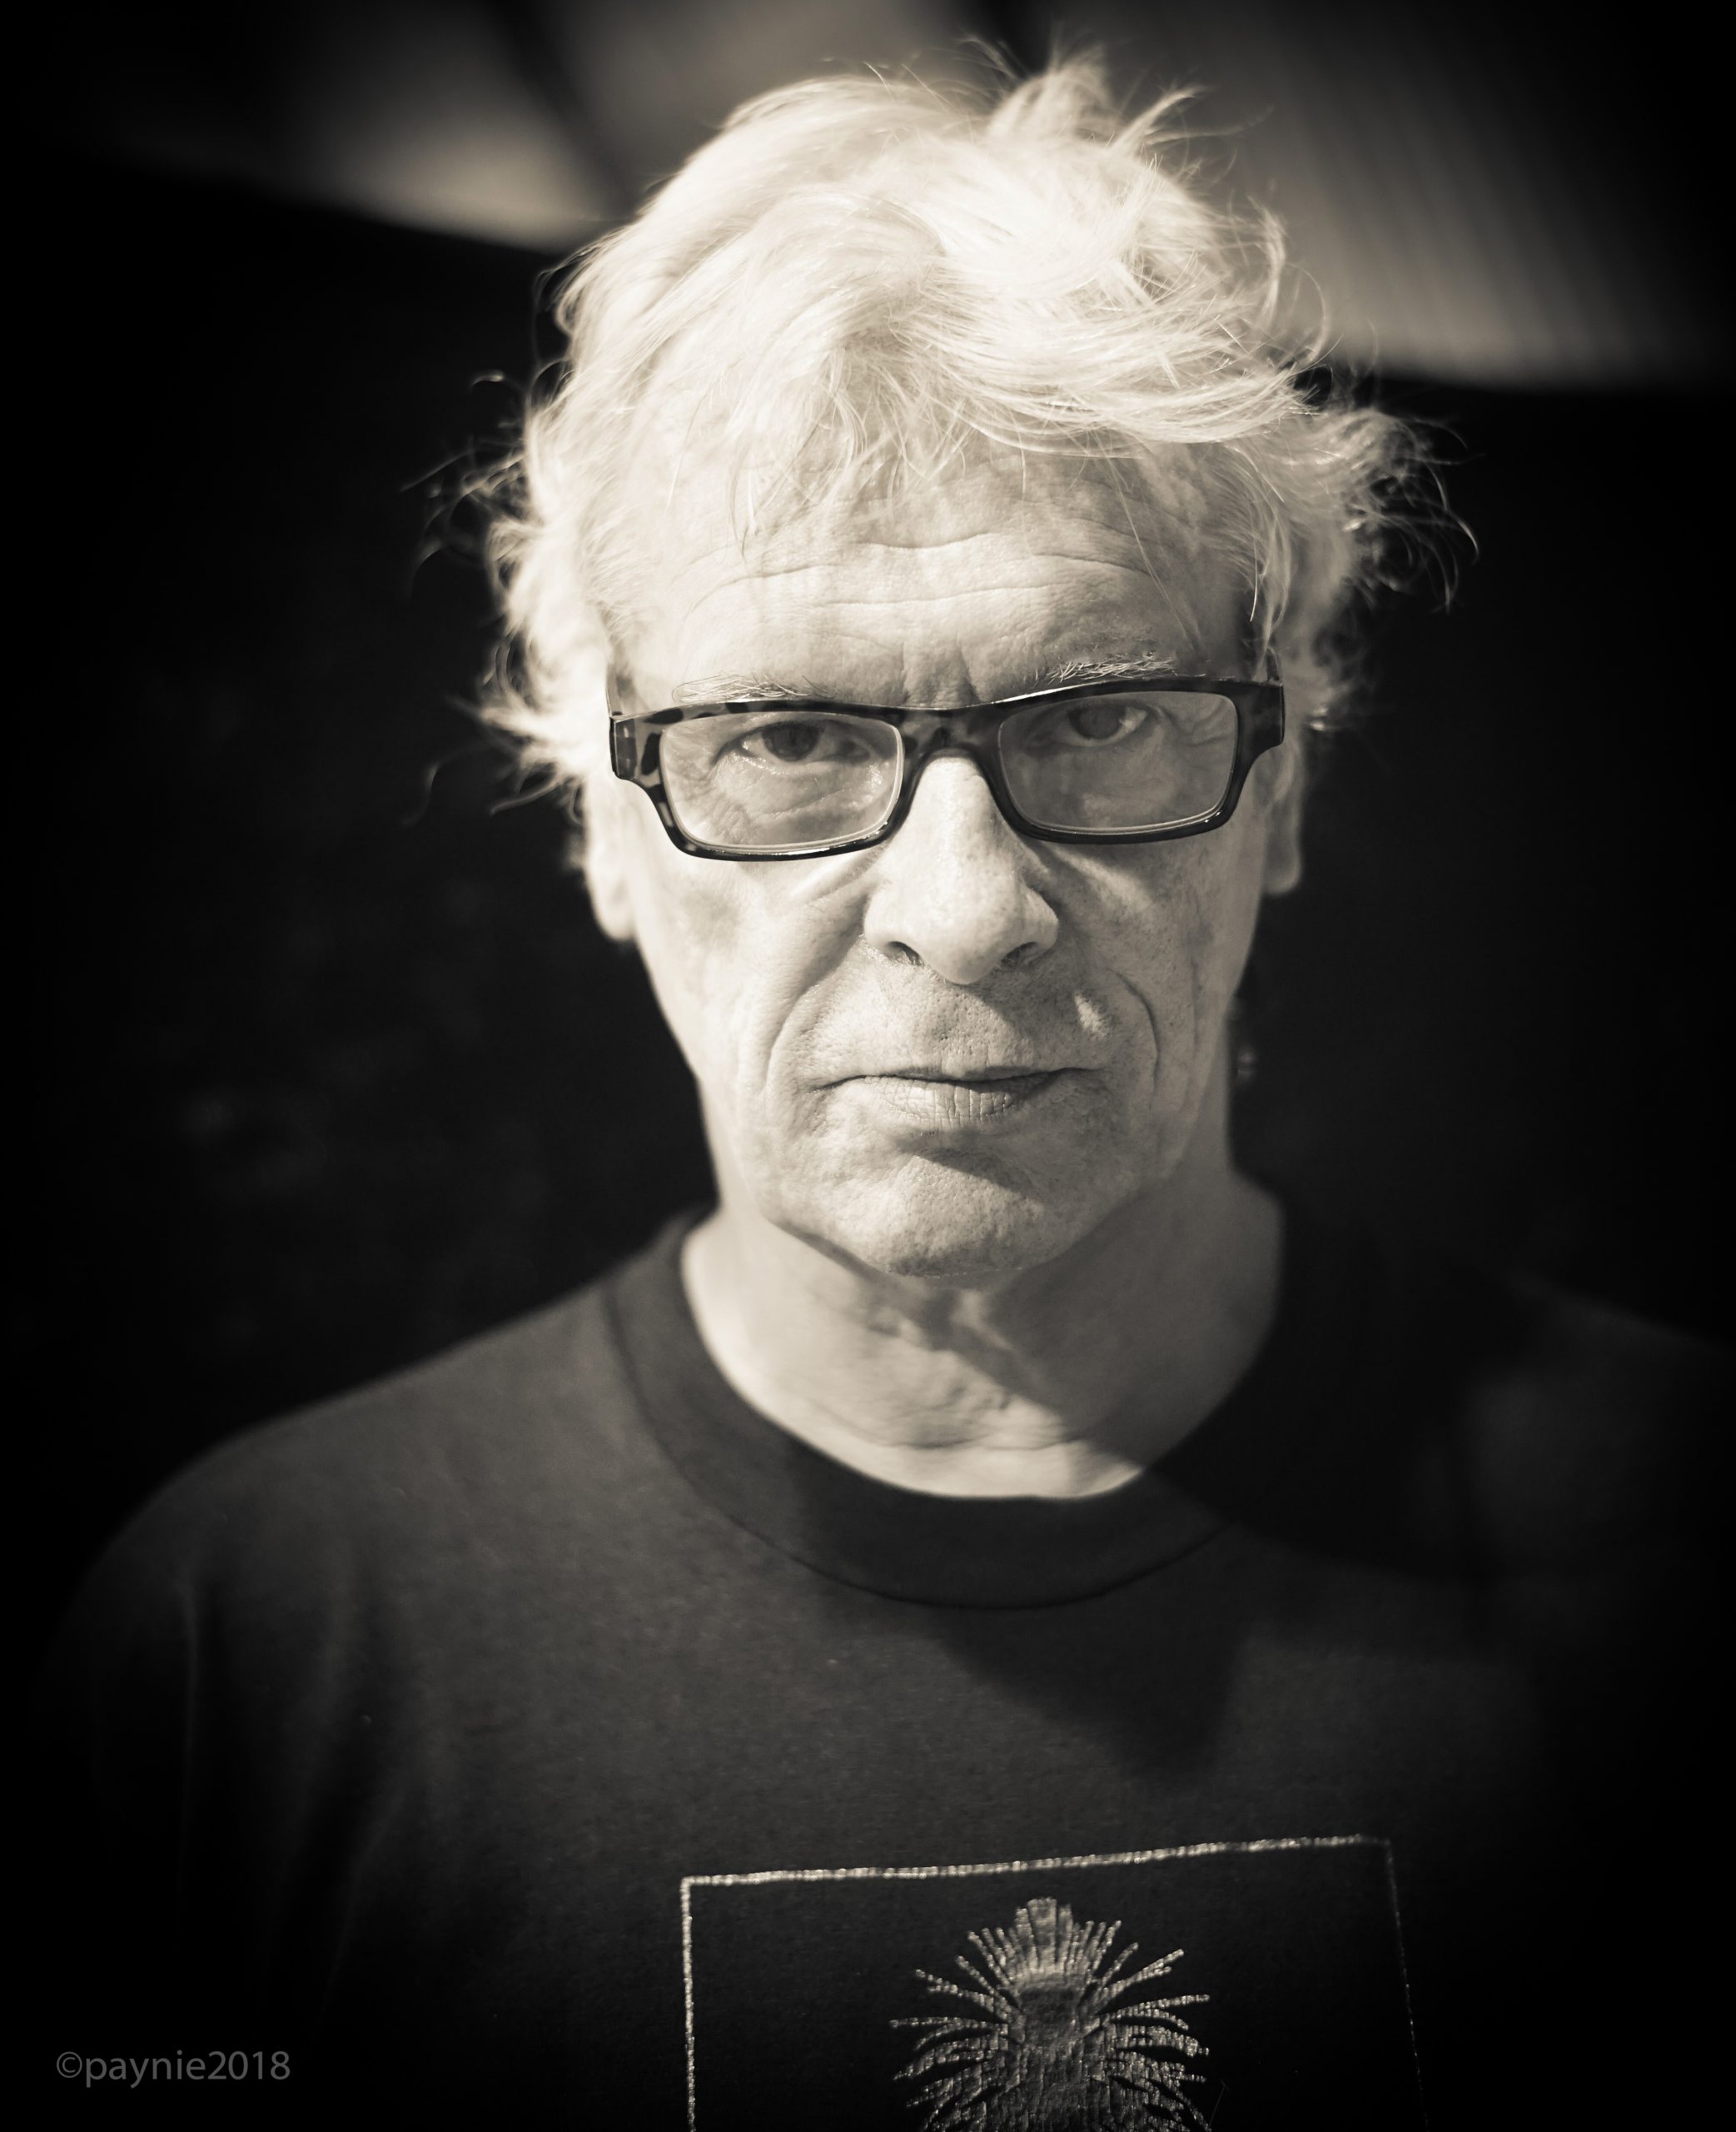 Black and white image of Steven Payne, headshot